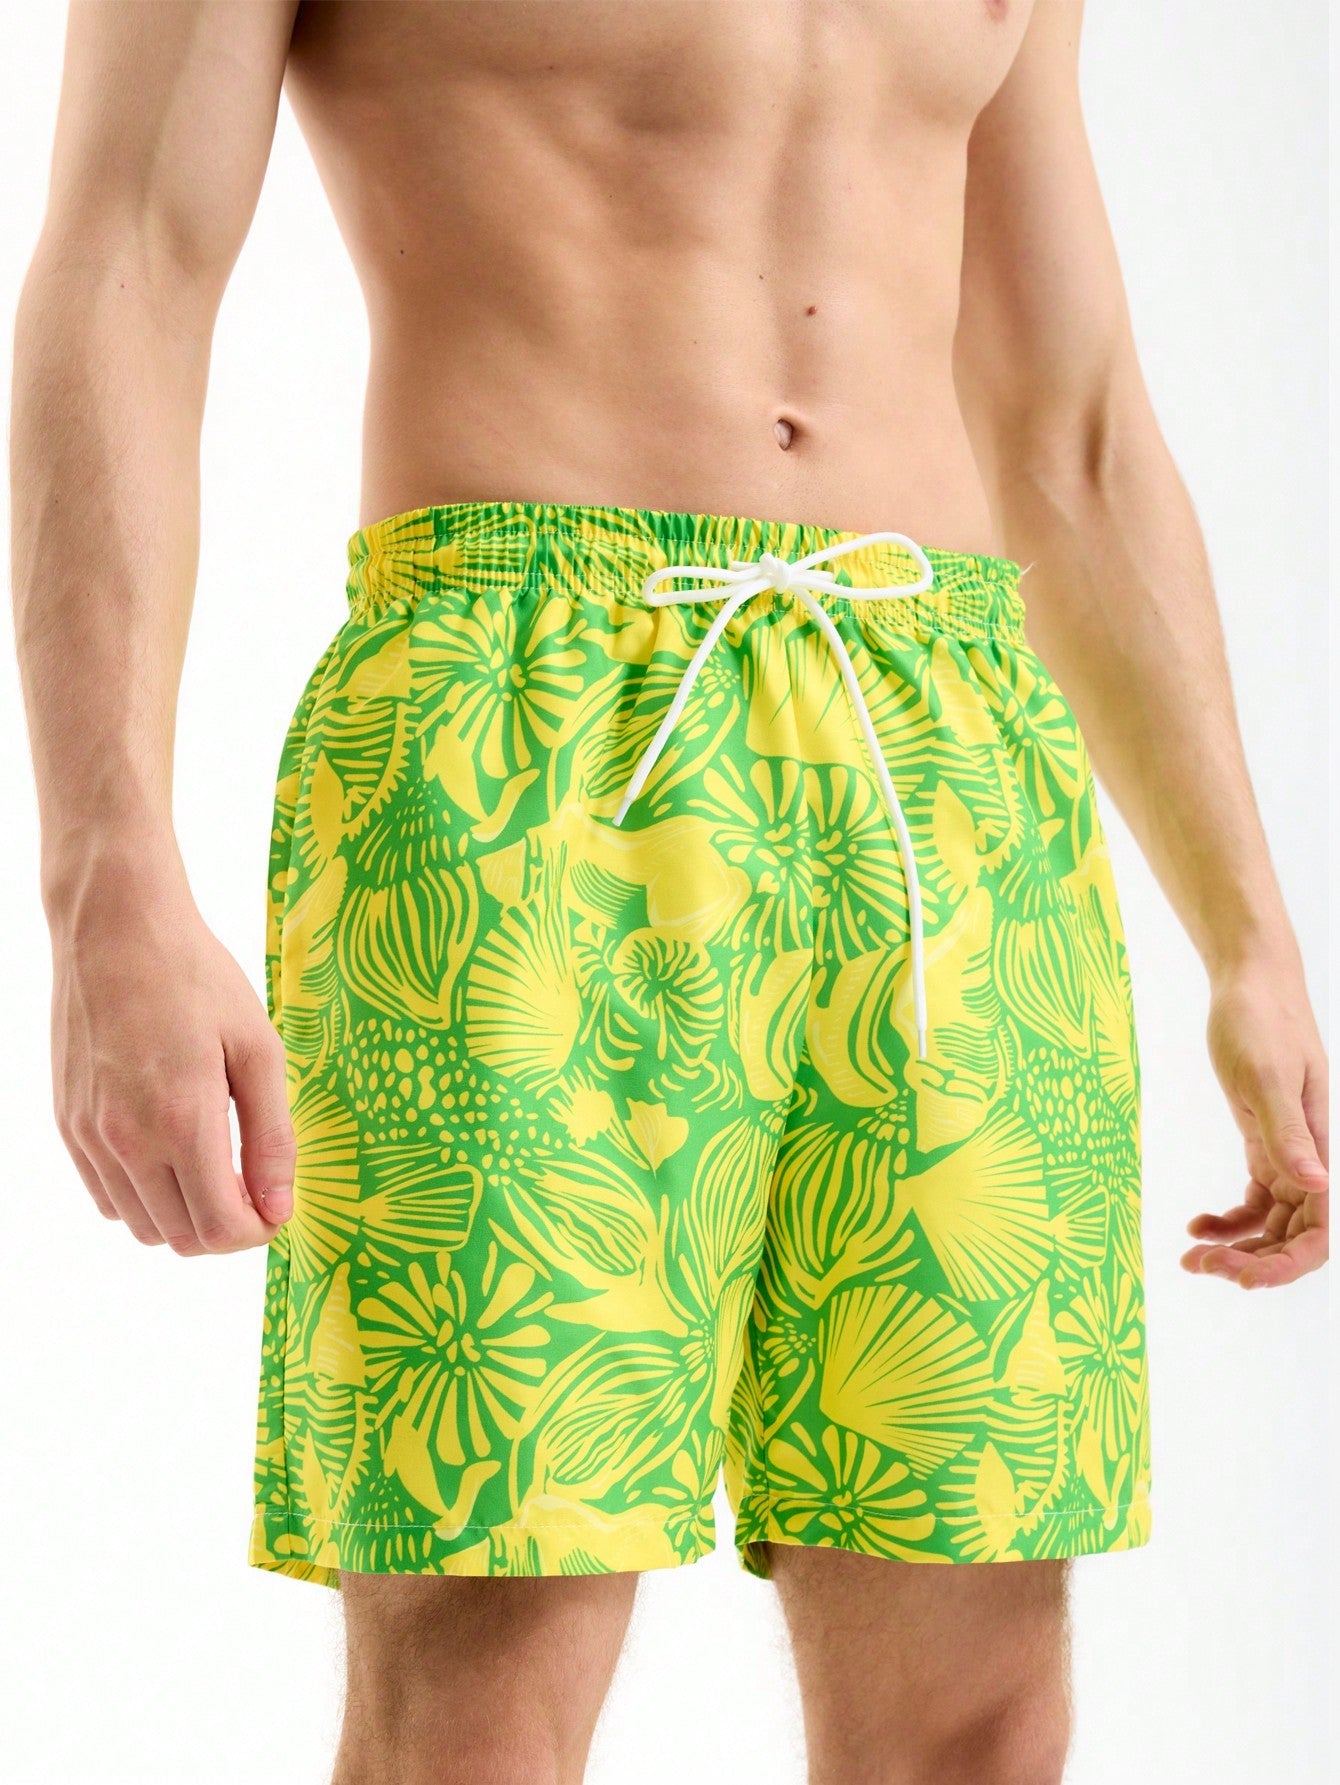 Boho Plant Print Unisex Beach Shorts - Drawstring Waist, Pockets, 100% Polyester